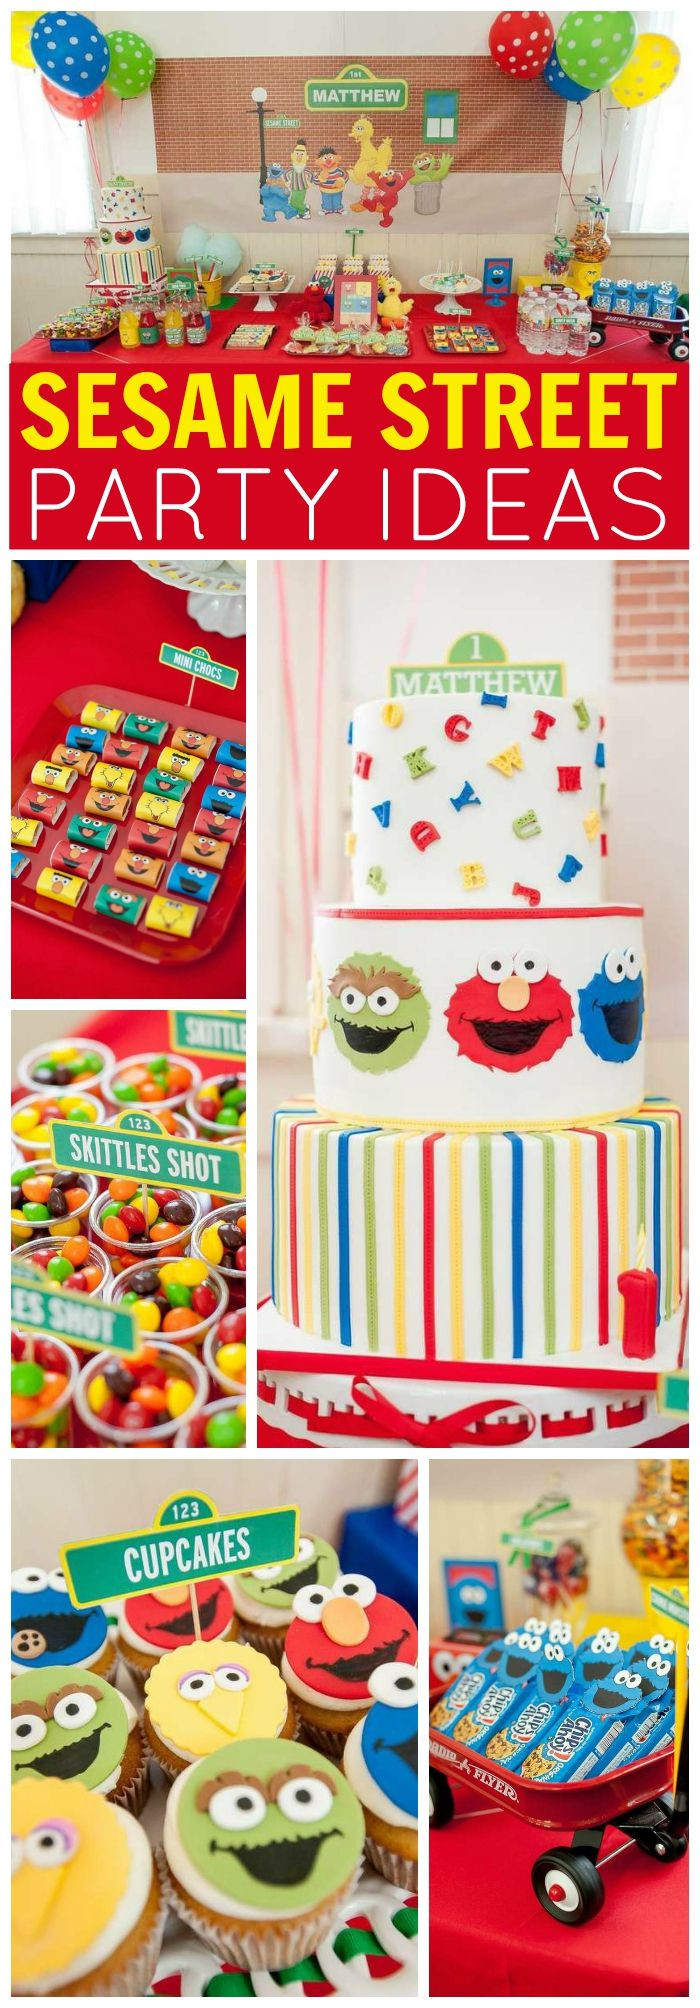 Best ideas about Sesame Street Birthday Party
. Save or Pin 25 bästa idéerna om Sesame streets på Pinterest Now.